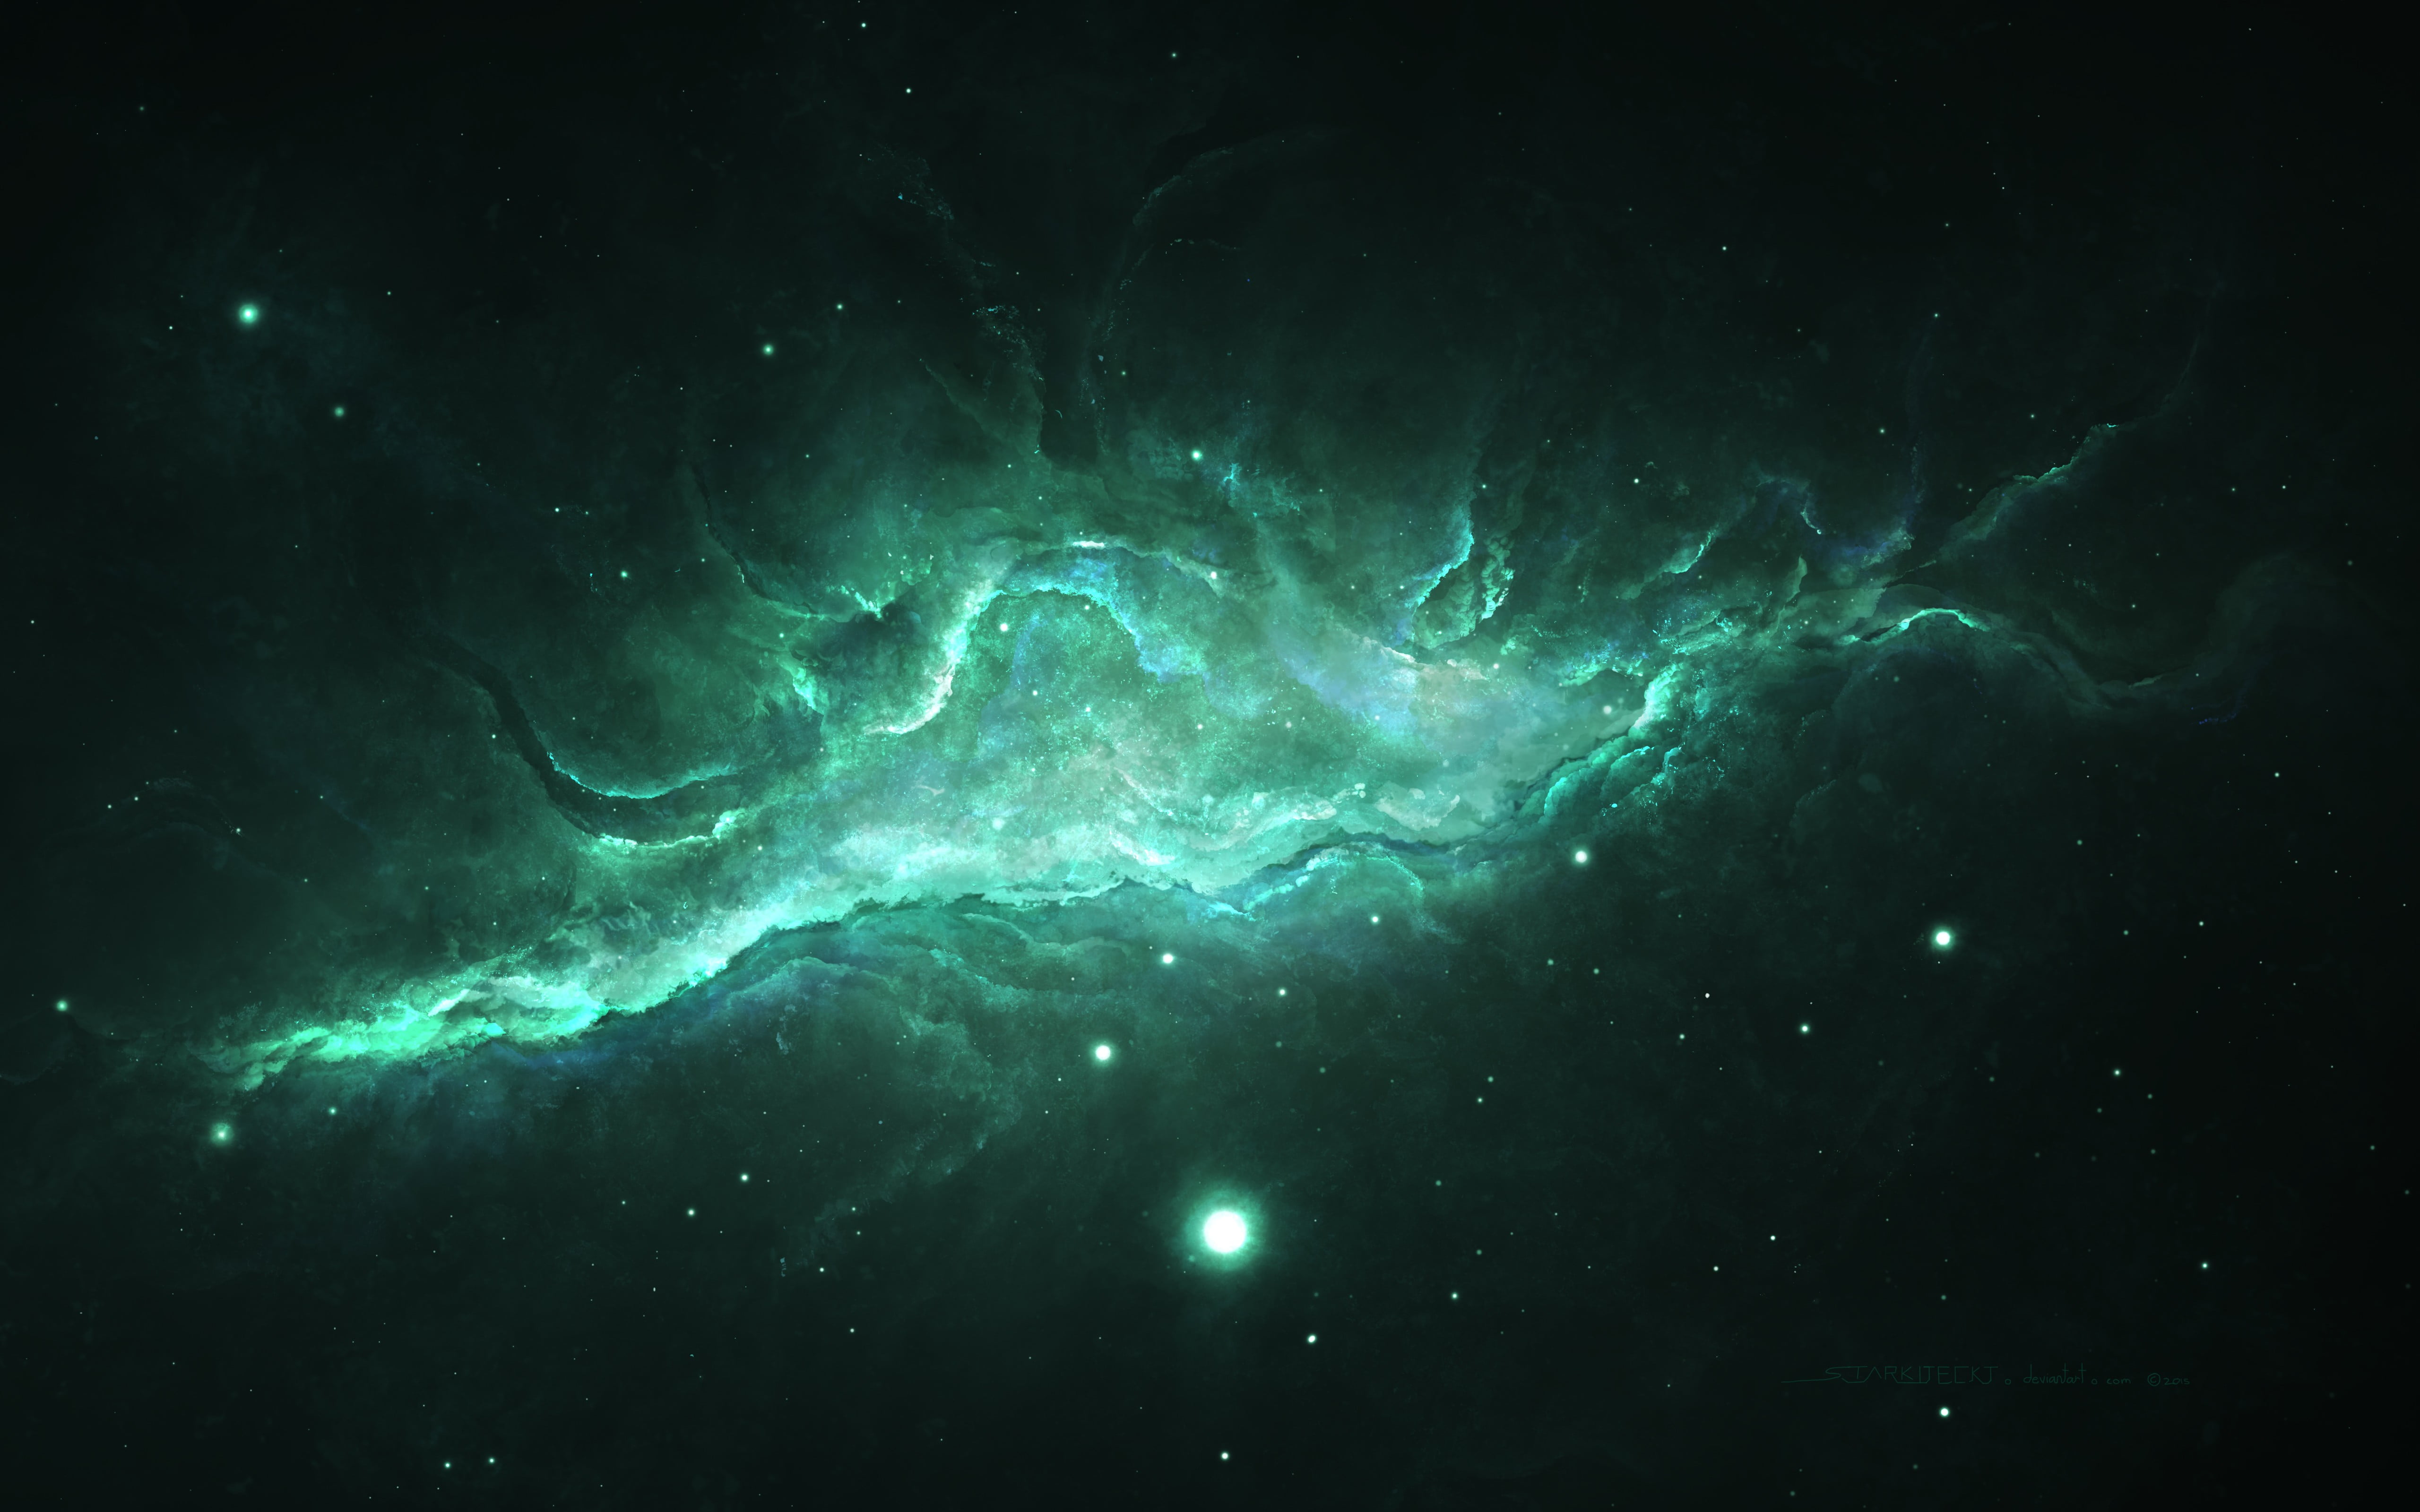 Space wallpaper  Green galaxy by dazalicious on DeviantArt